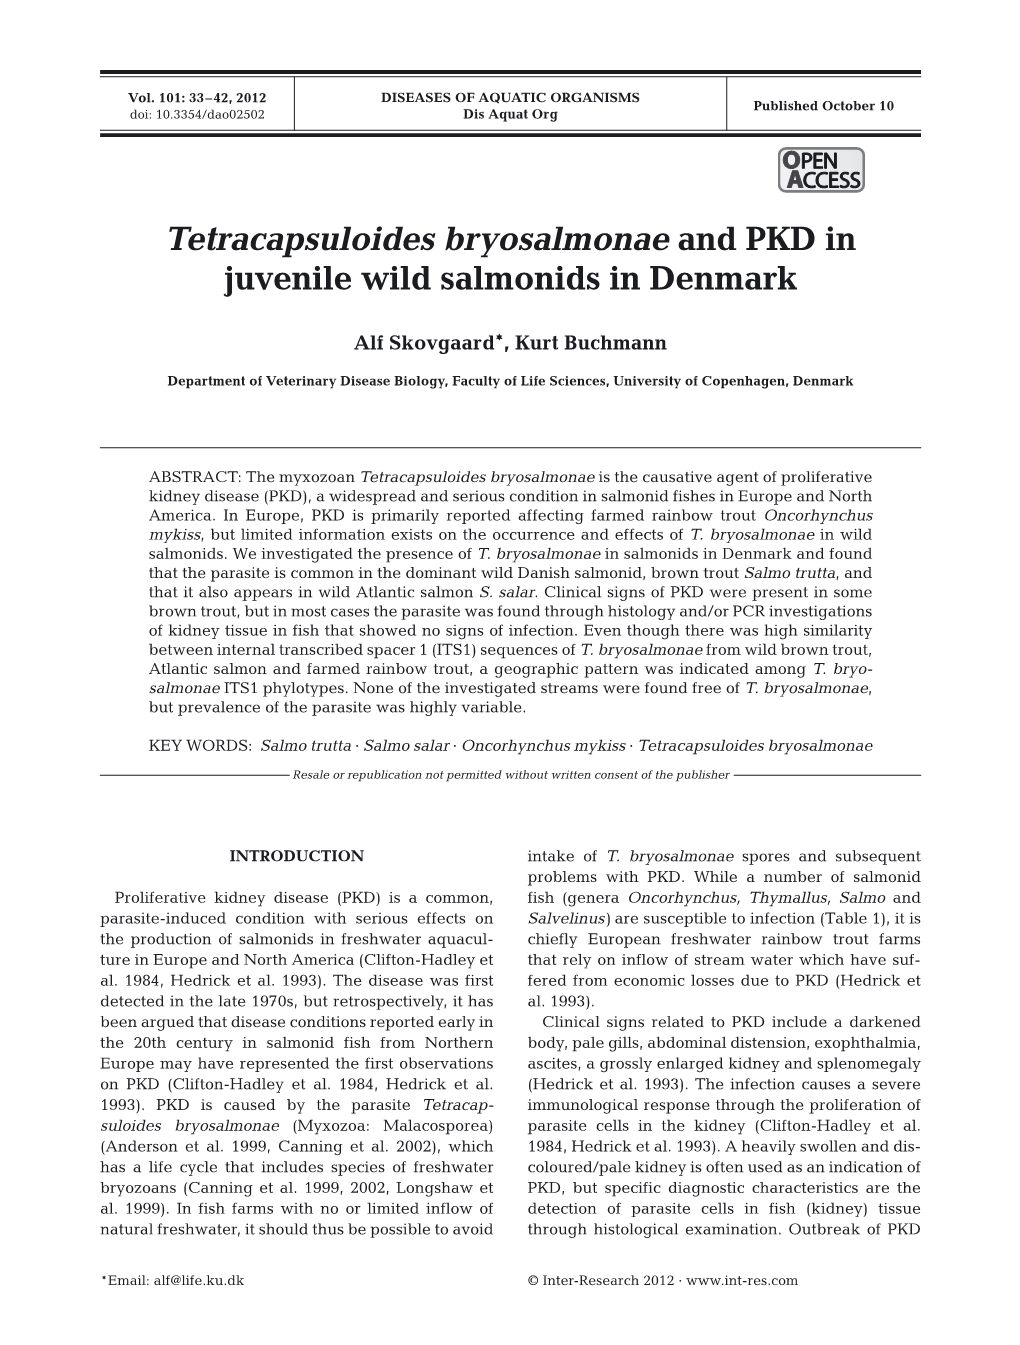 Tetracapsuloides Bryosalmonae and PKD in Juvenile Wild Salmonids in Denmark